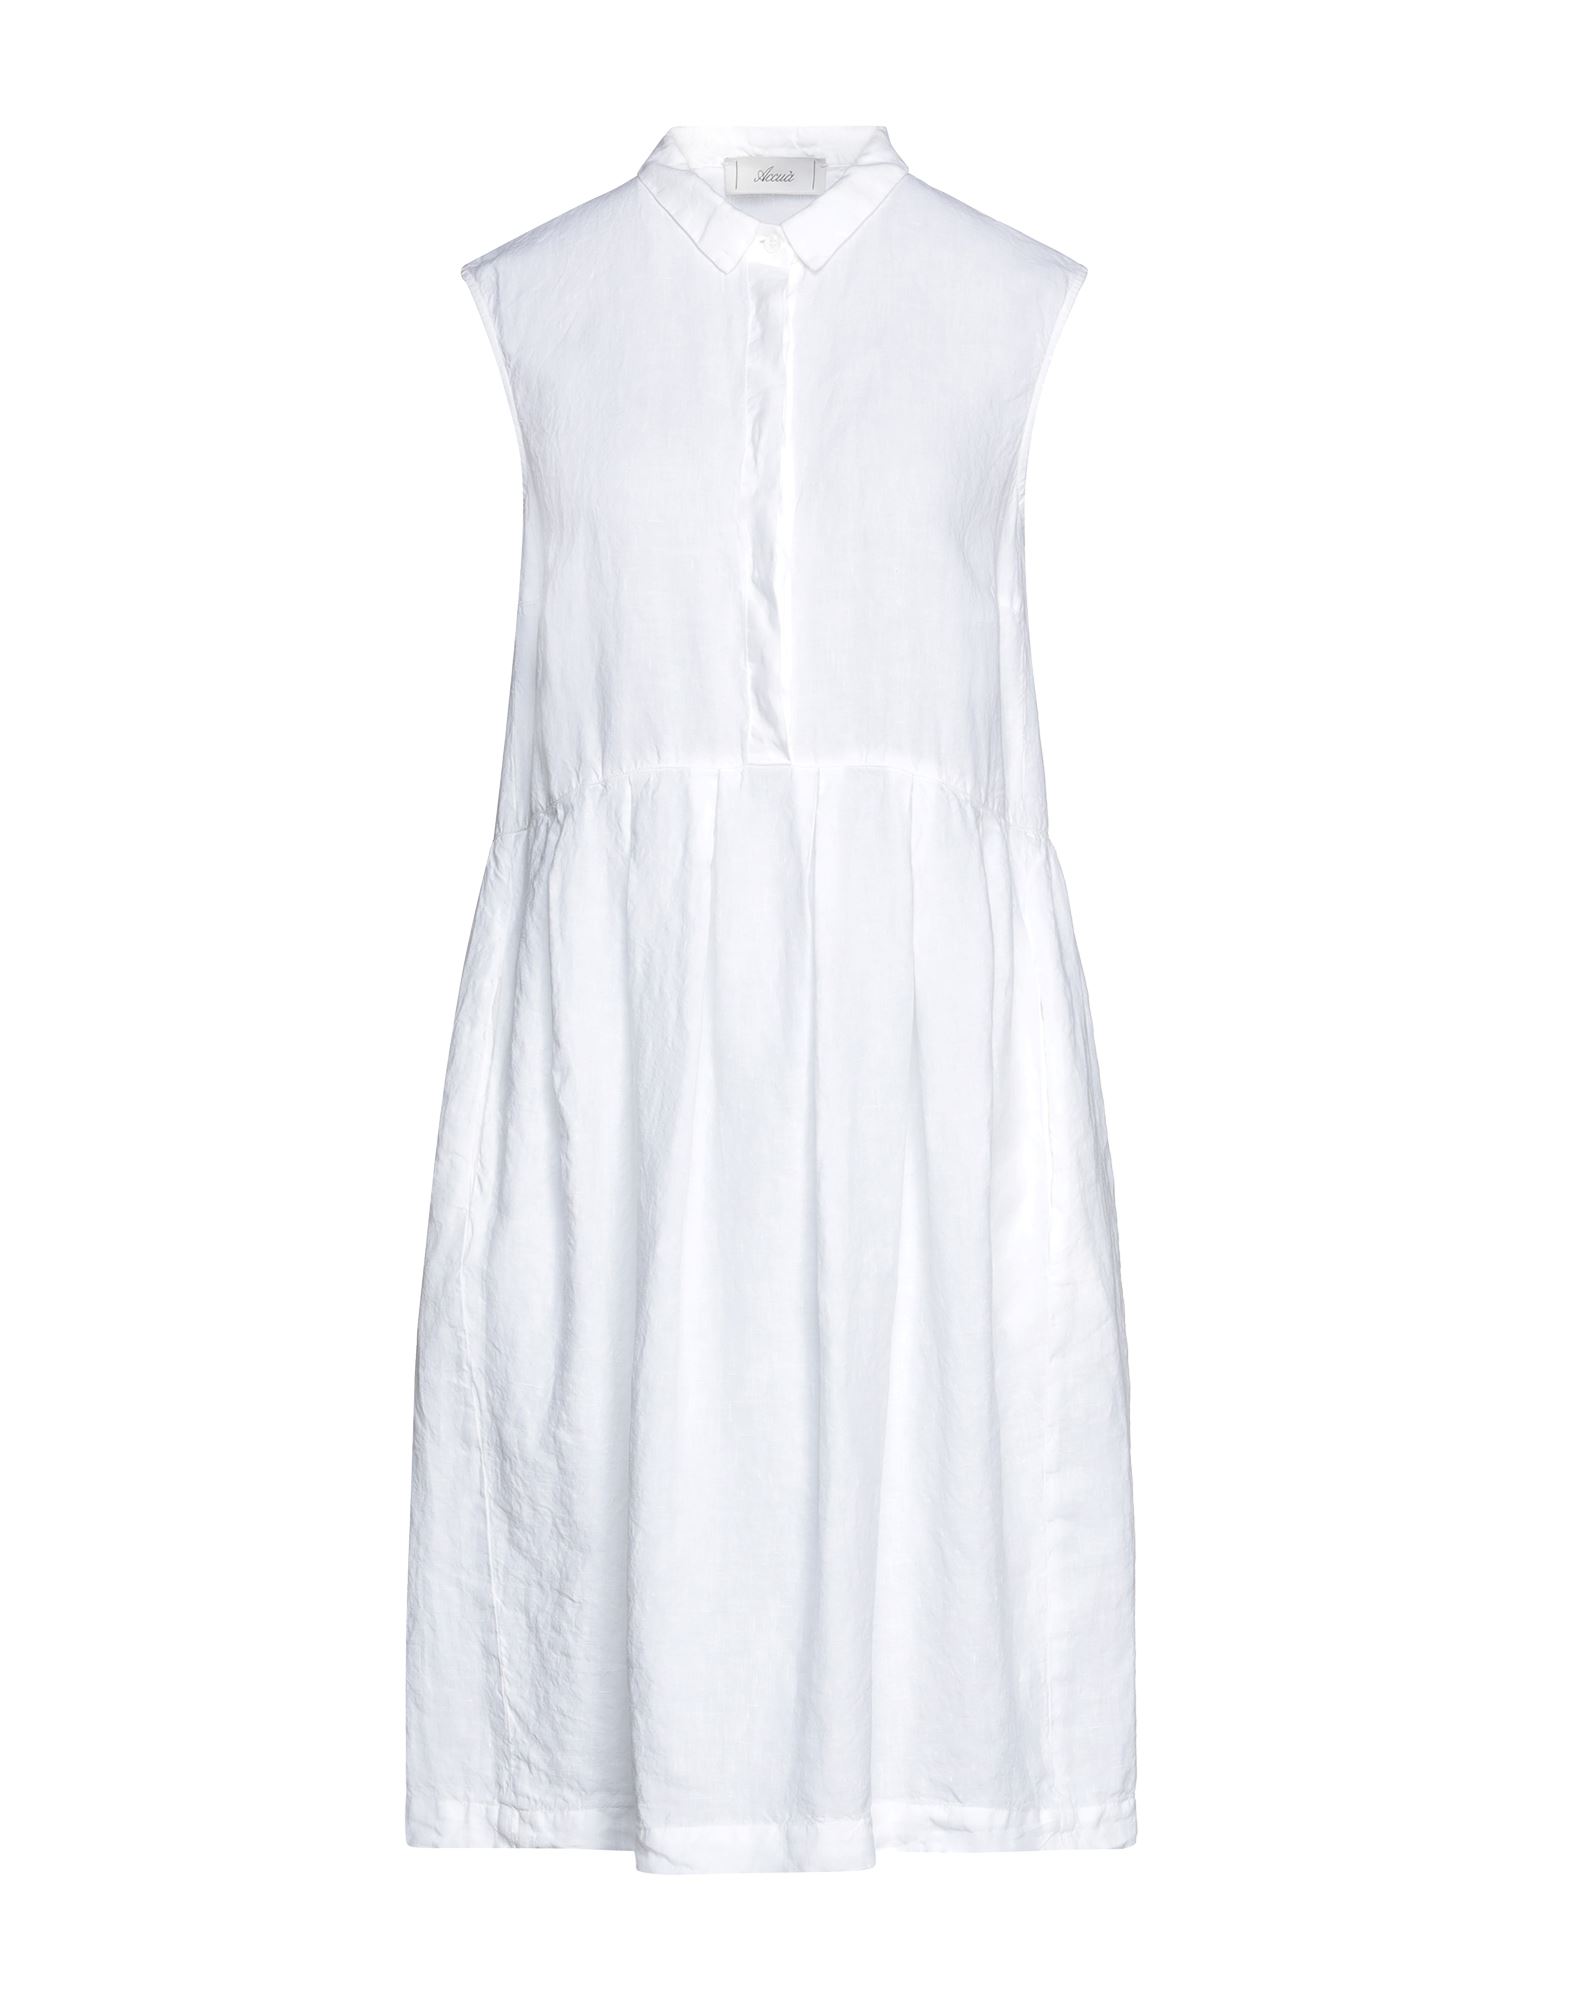 Accuà By Psr Midi Dresses In White